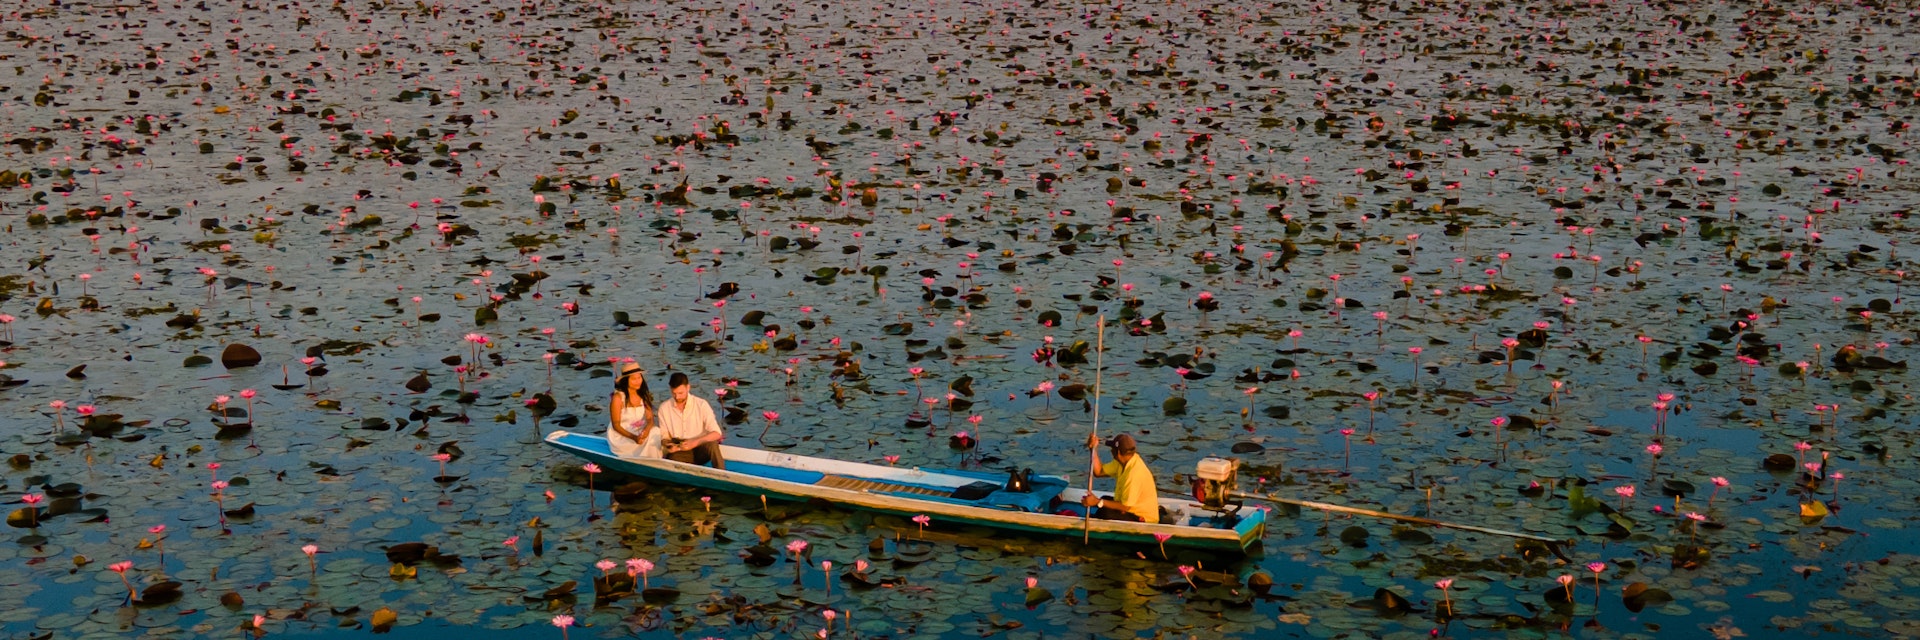 Sunrise at the sea of red lotus, Lake Nong Harn, Udon Thani, Thailand.